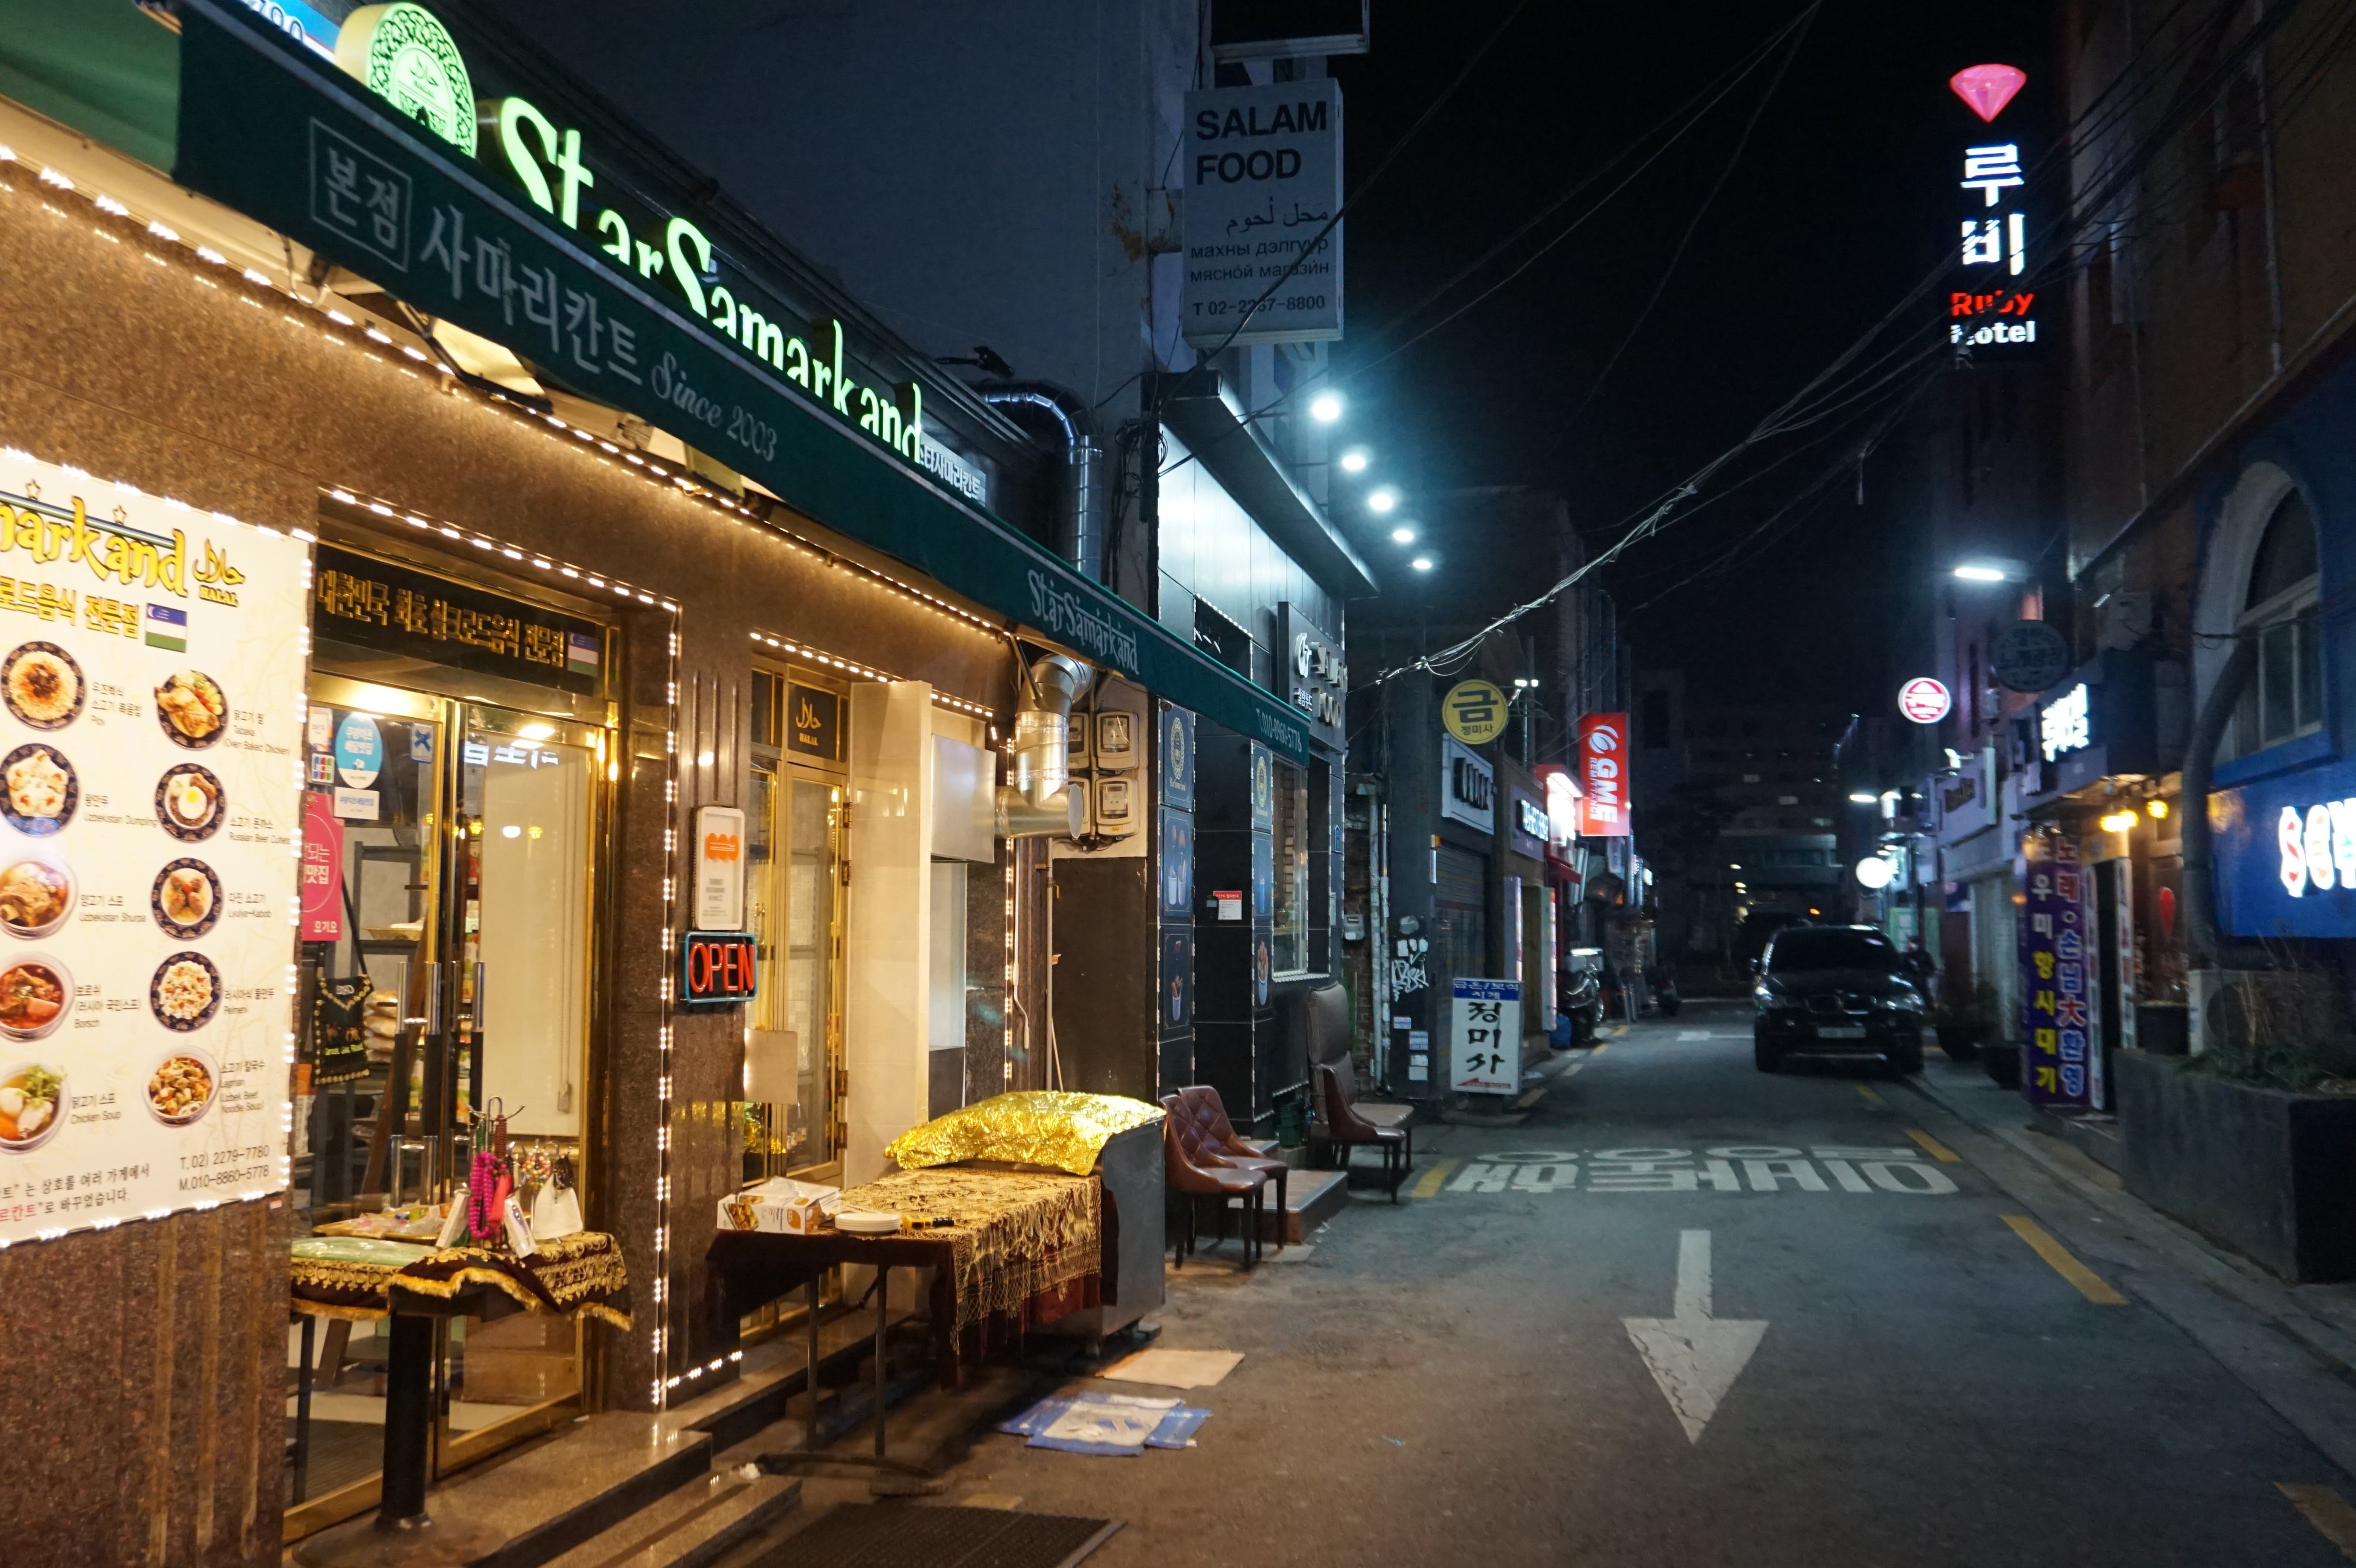 Russian Street in Seoul at night. Photo: David Lee